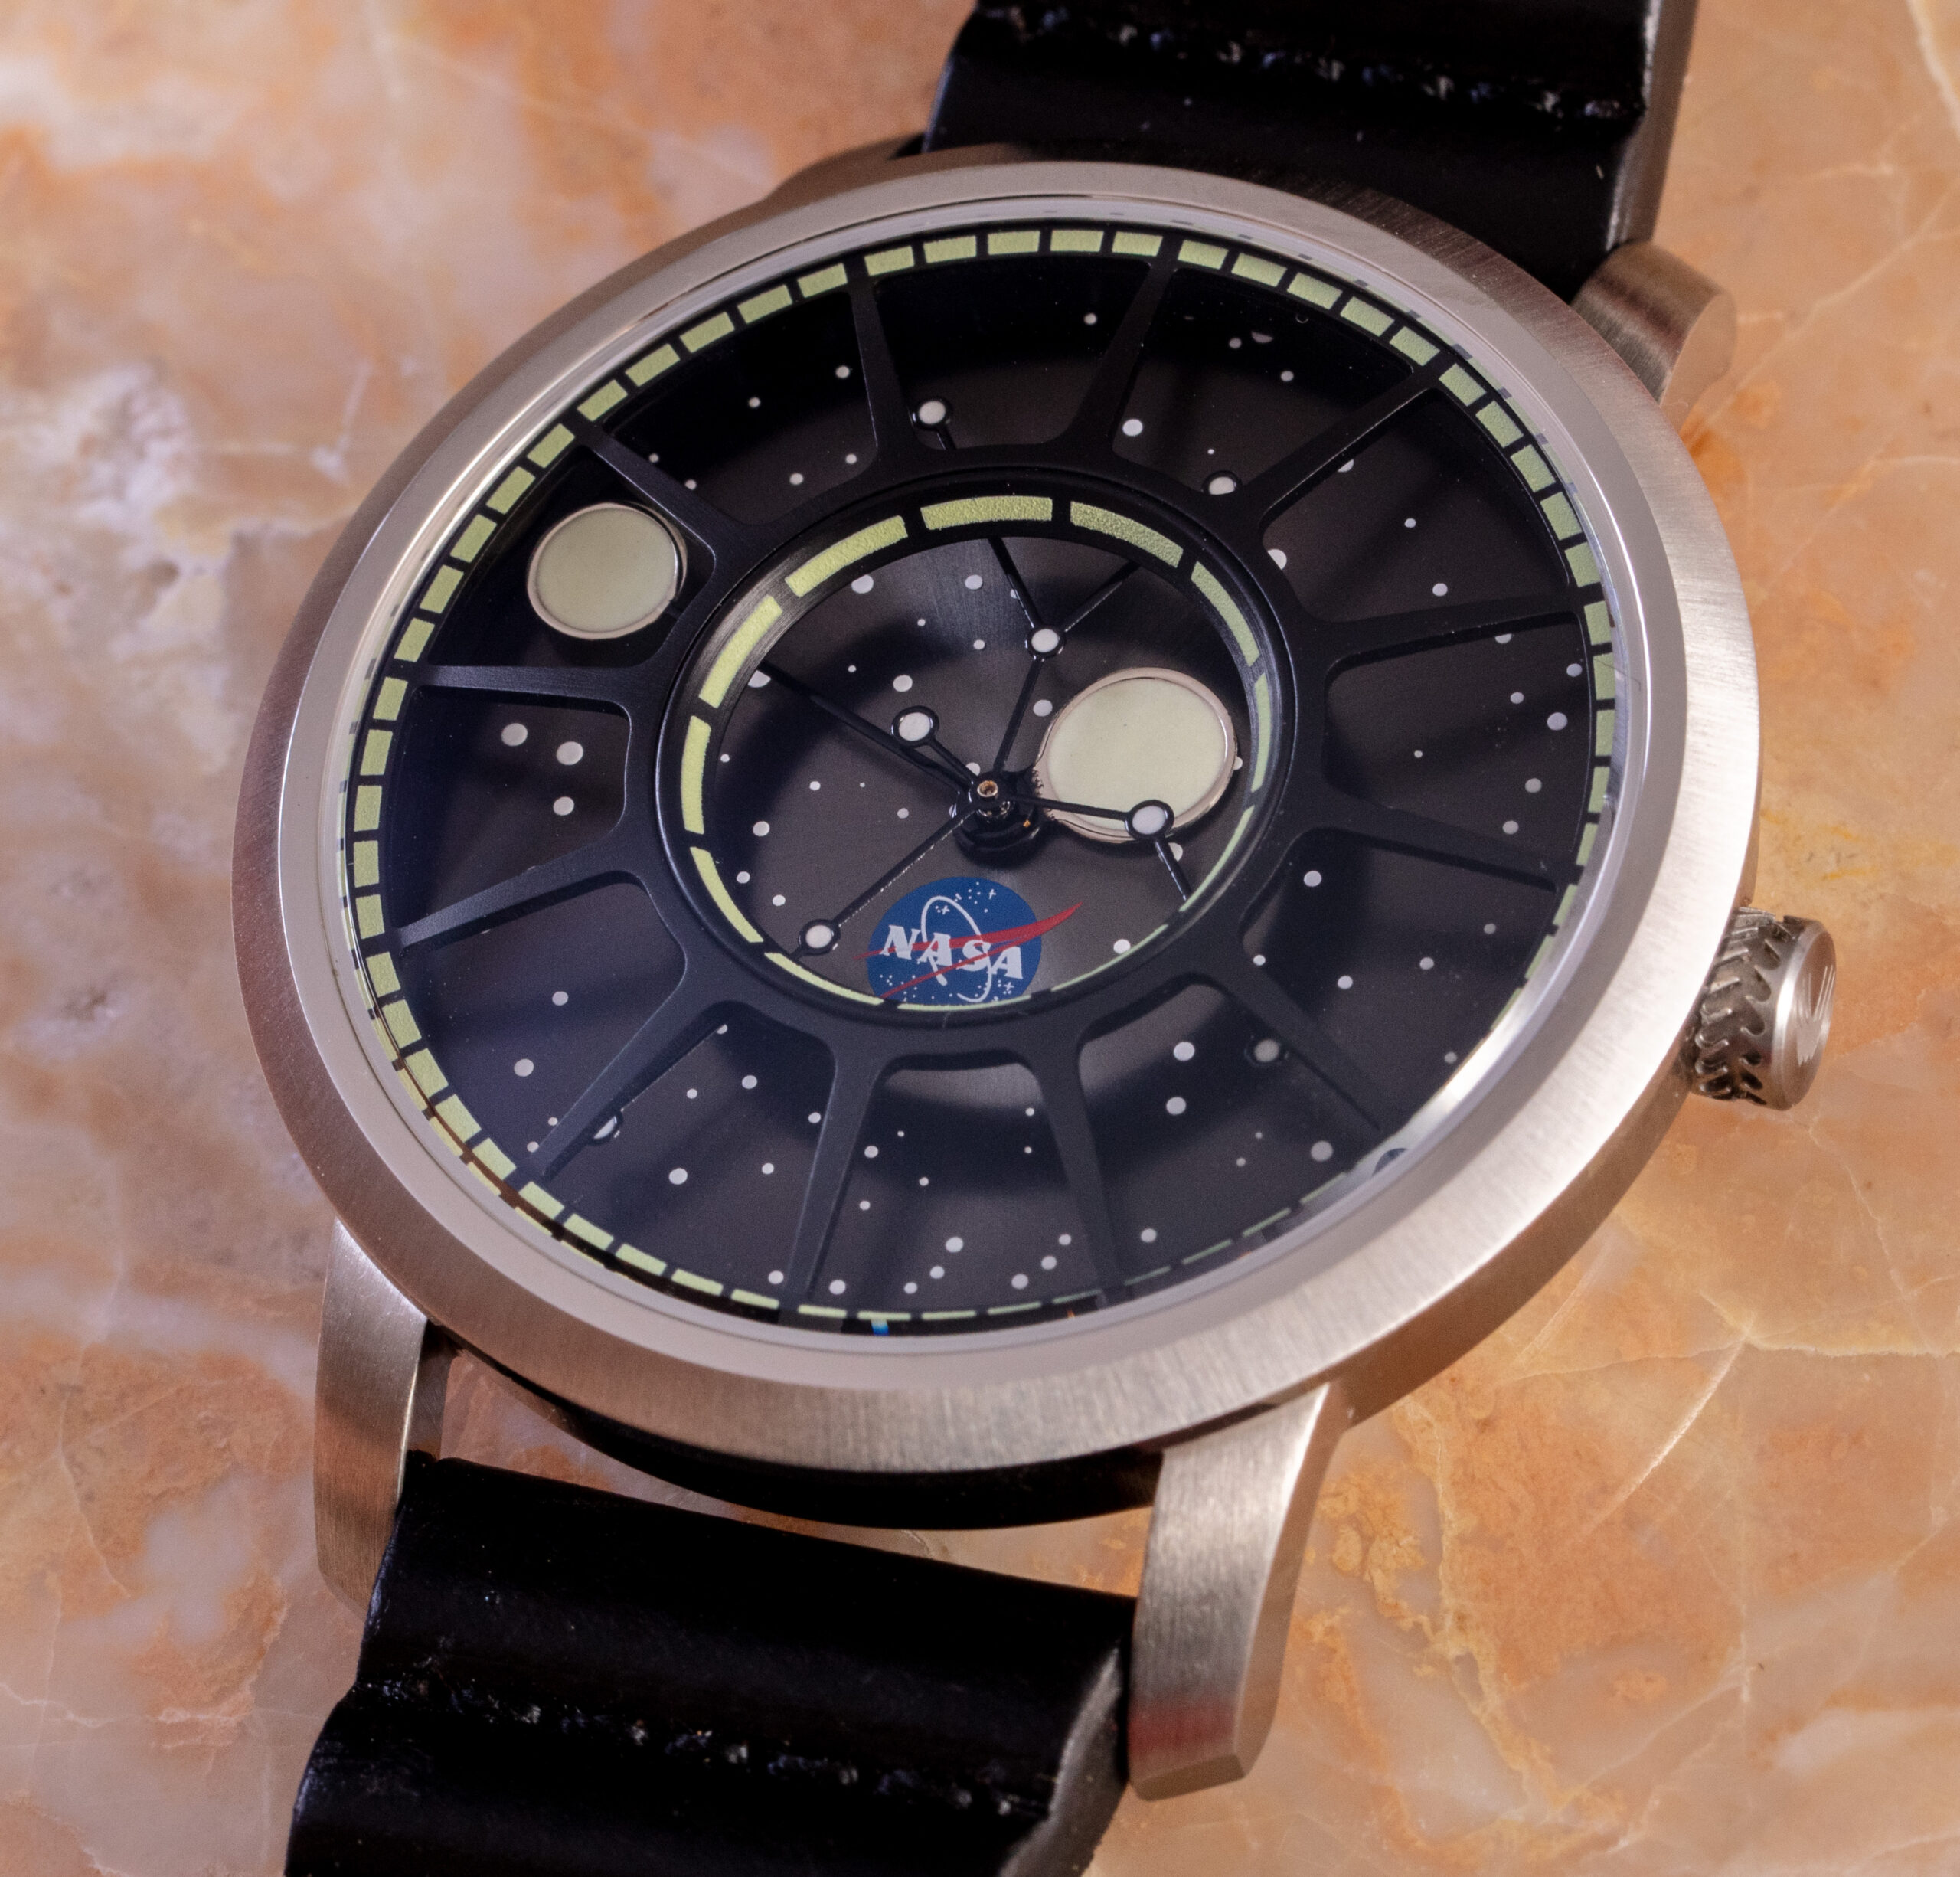 Watch Review: Xeric NASA Apollo 15 American Automatic | aBlogtoWatch